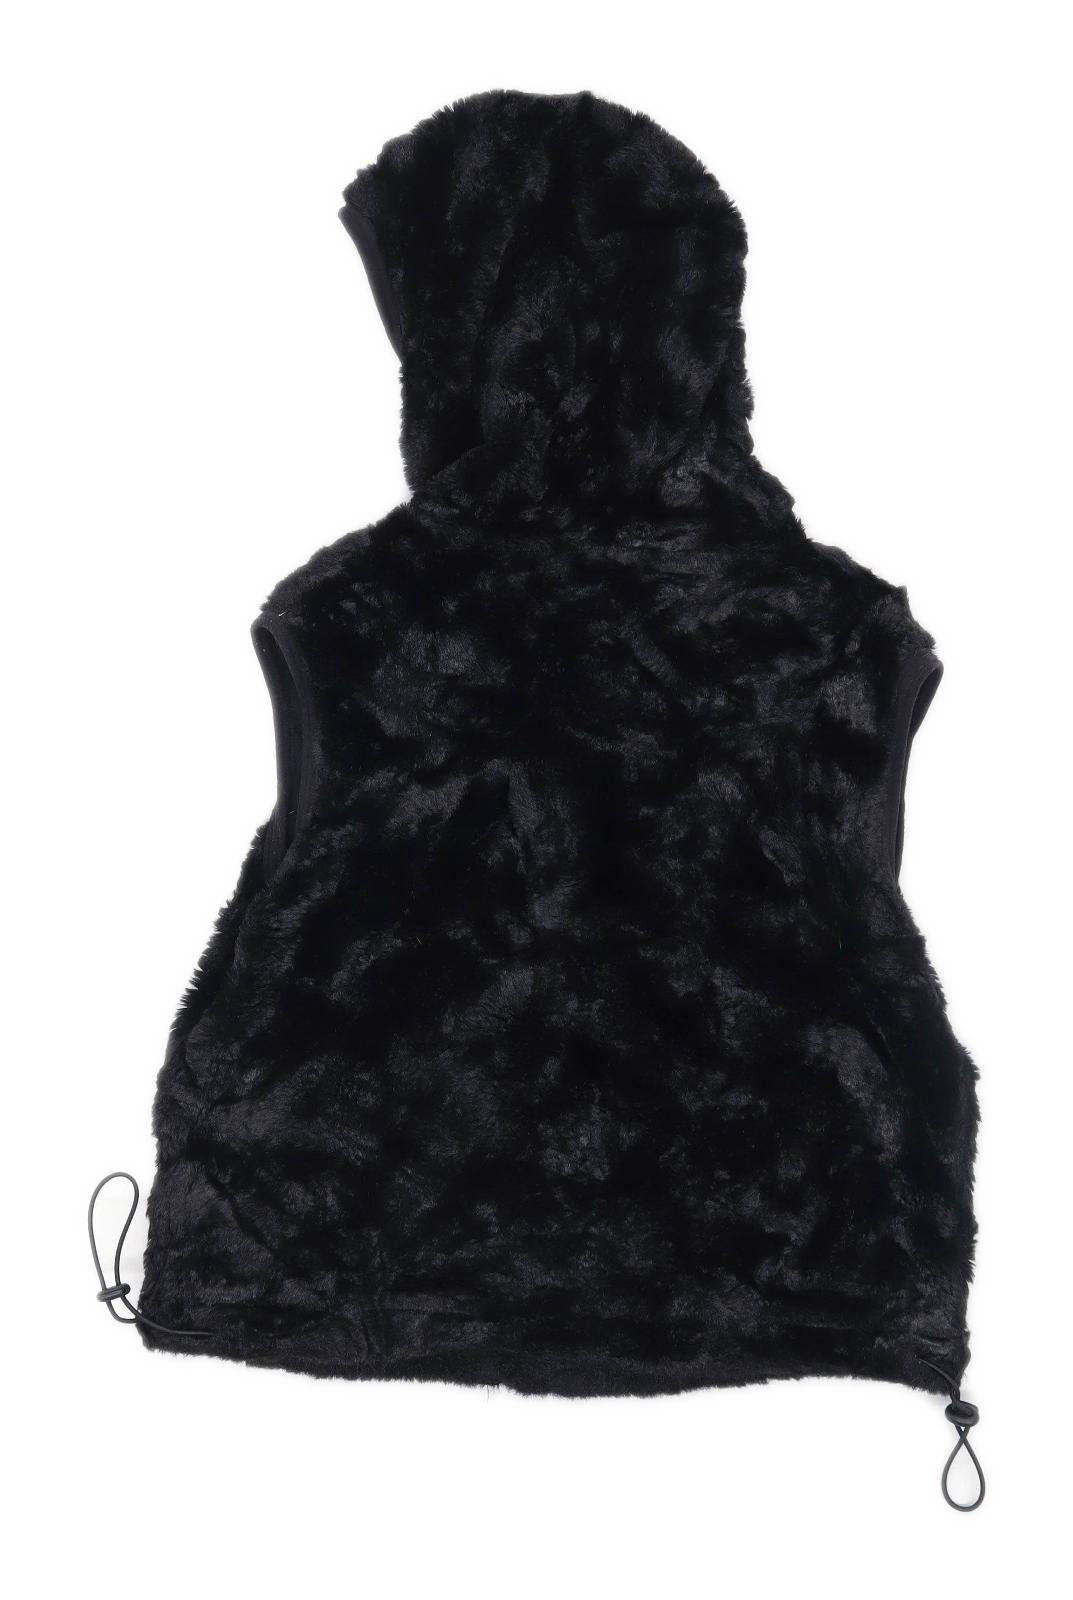 USA Pro Womens Size S Fleece Black Hooded Gilet